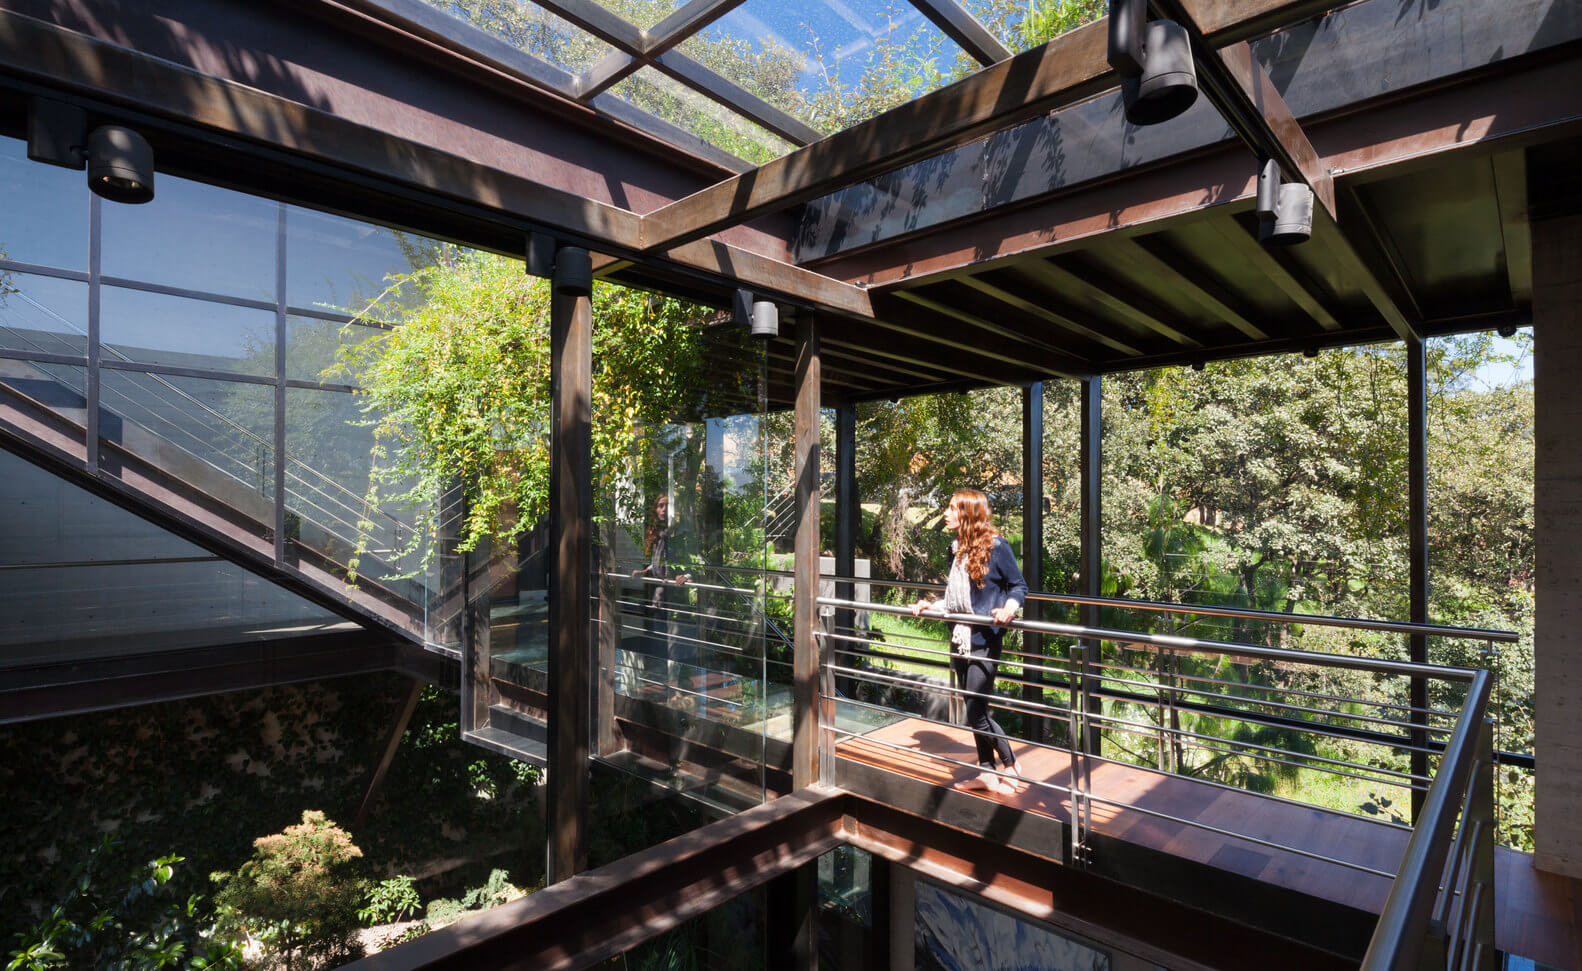 Casa no bosque na Cidade do México por Grupoarquitectura 016 Corredor + Piso de Vidro + Escada + Aço